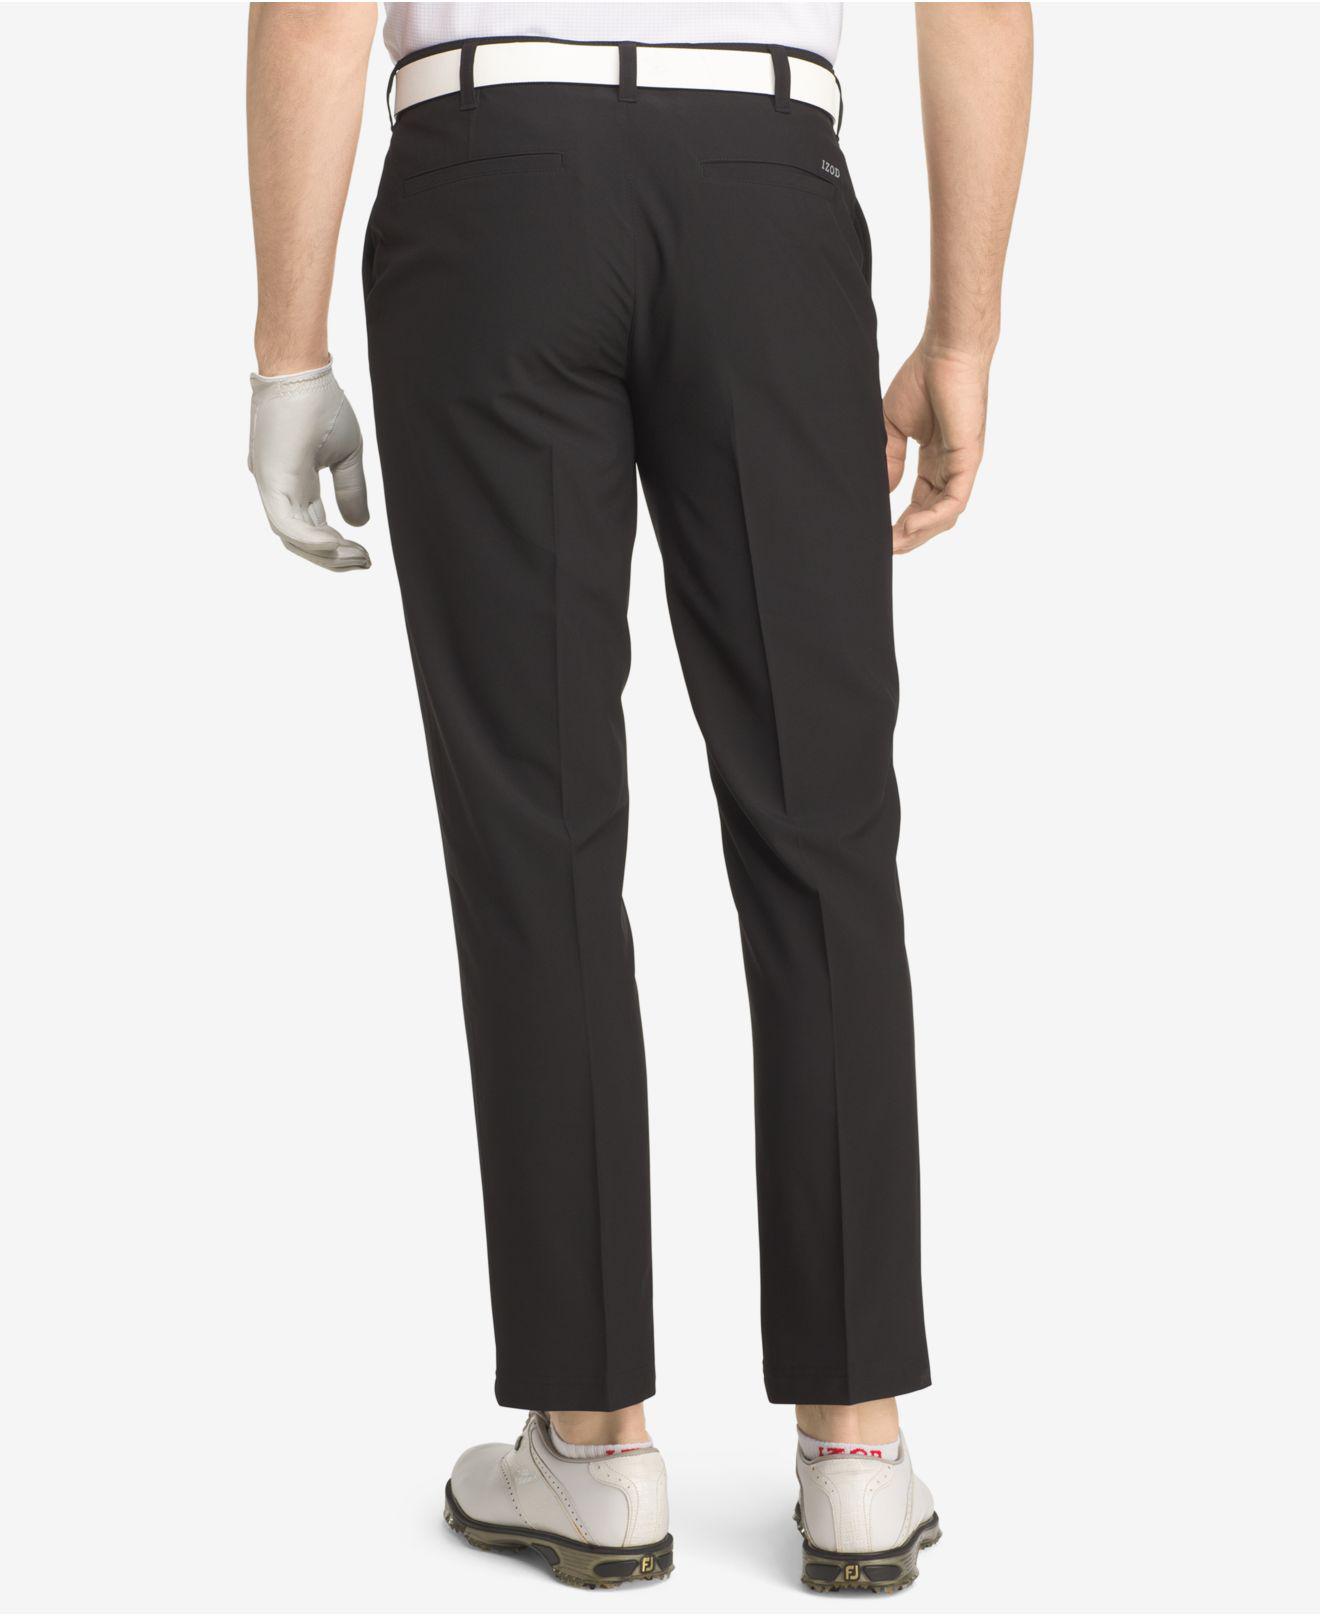 Izod Men's Golf Swing Flex Pants in Black for Men - Lyst